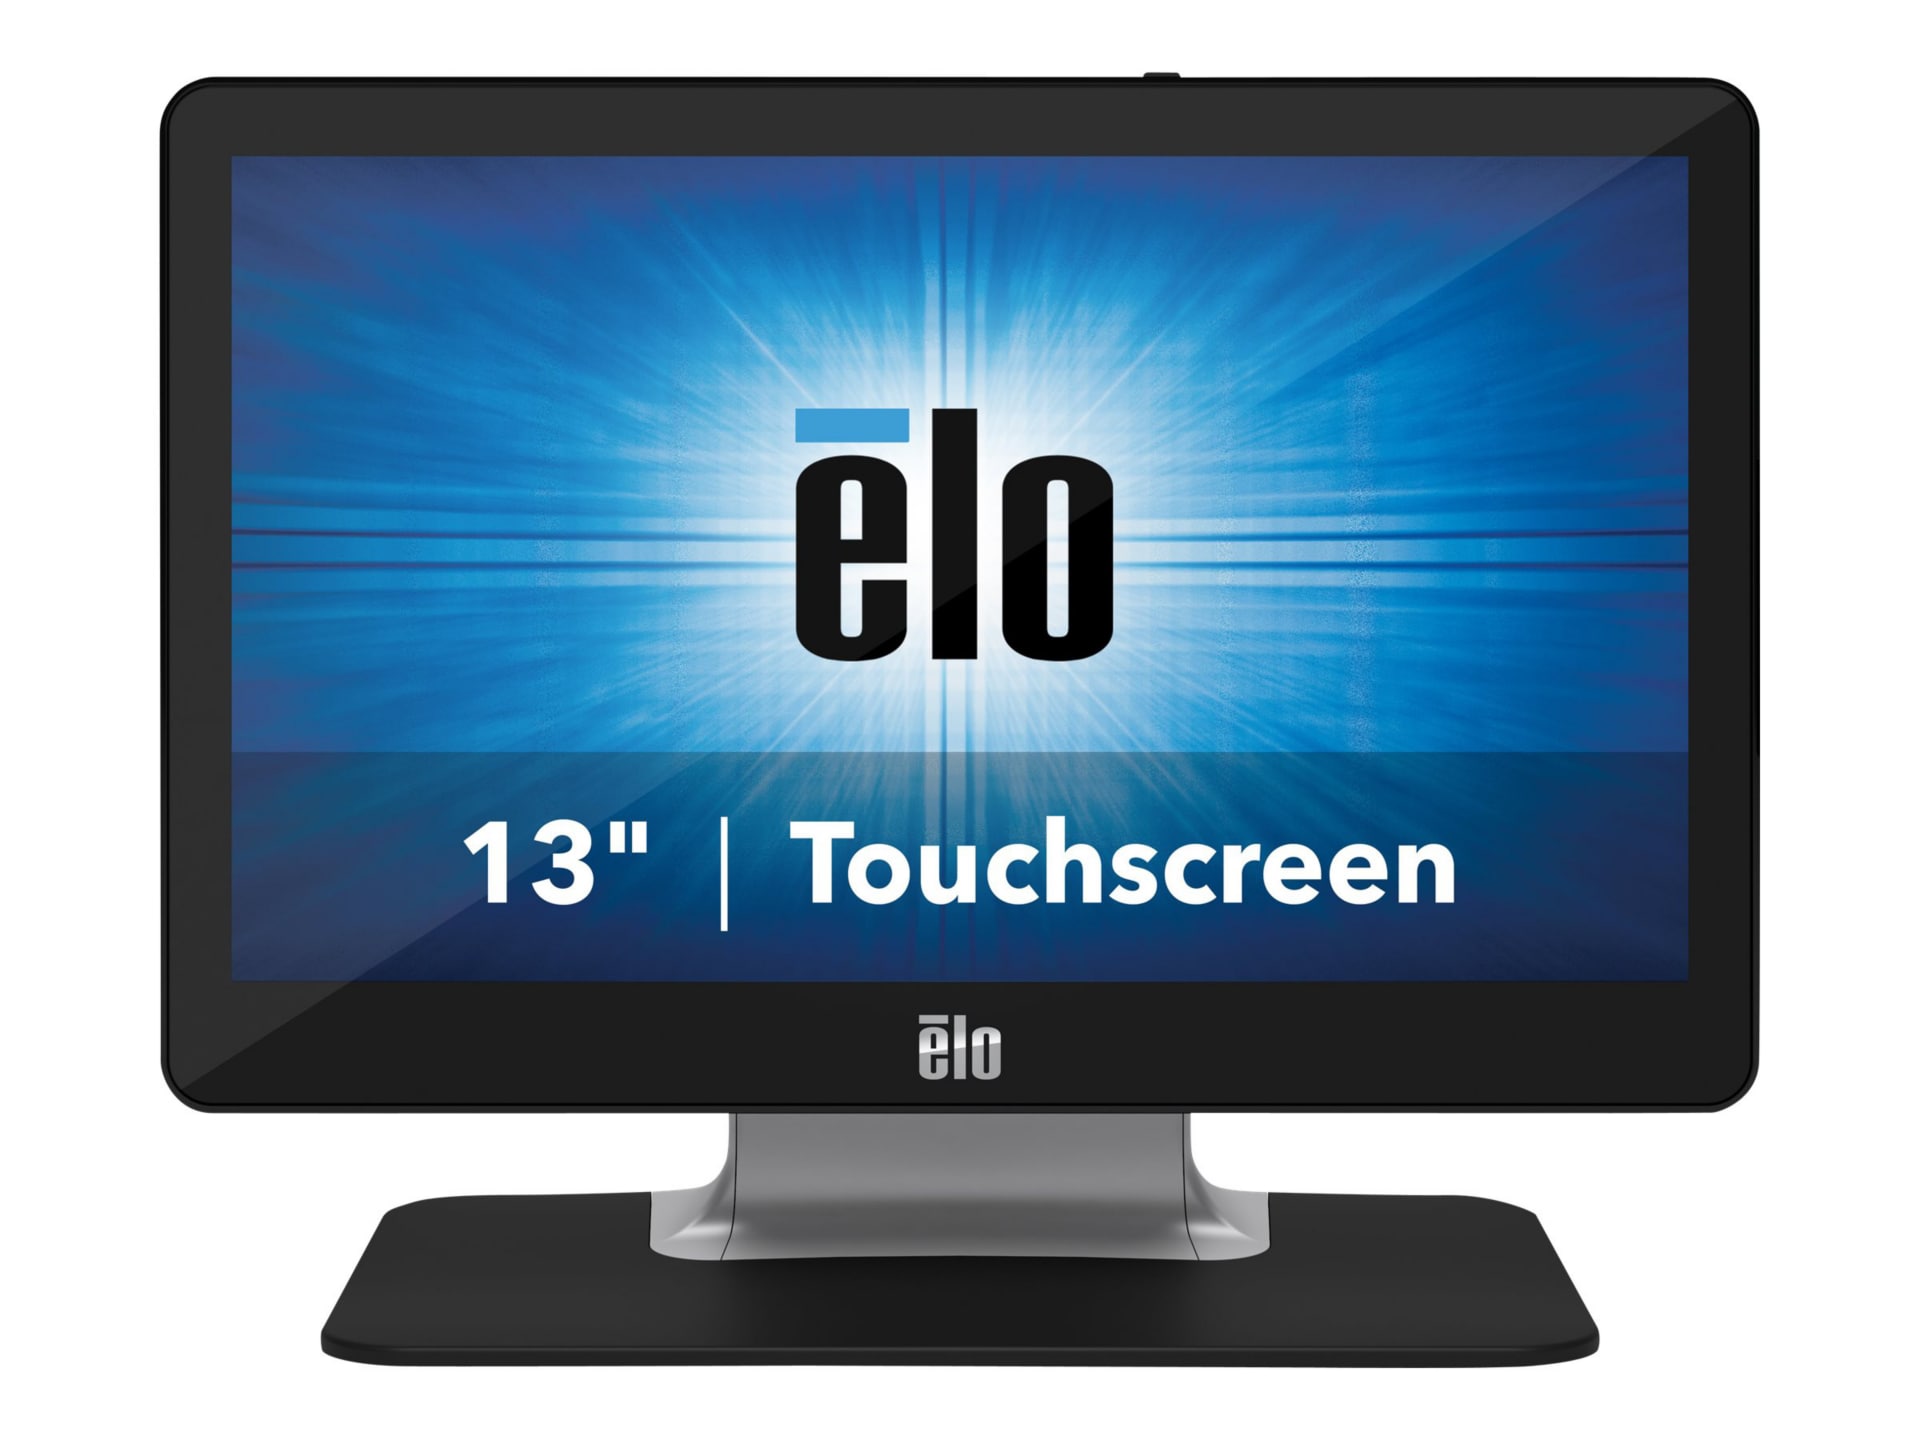 Elo 1302L - 13.3" Touchscreen Monitor